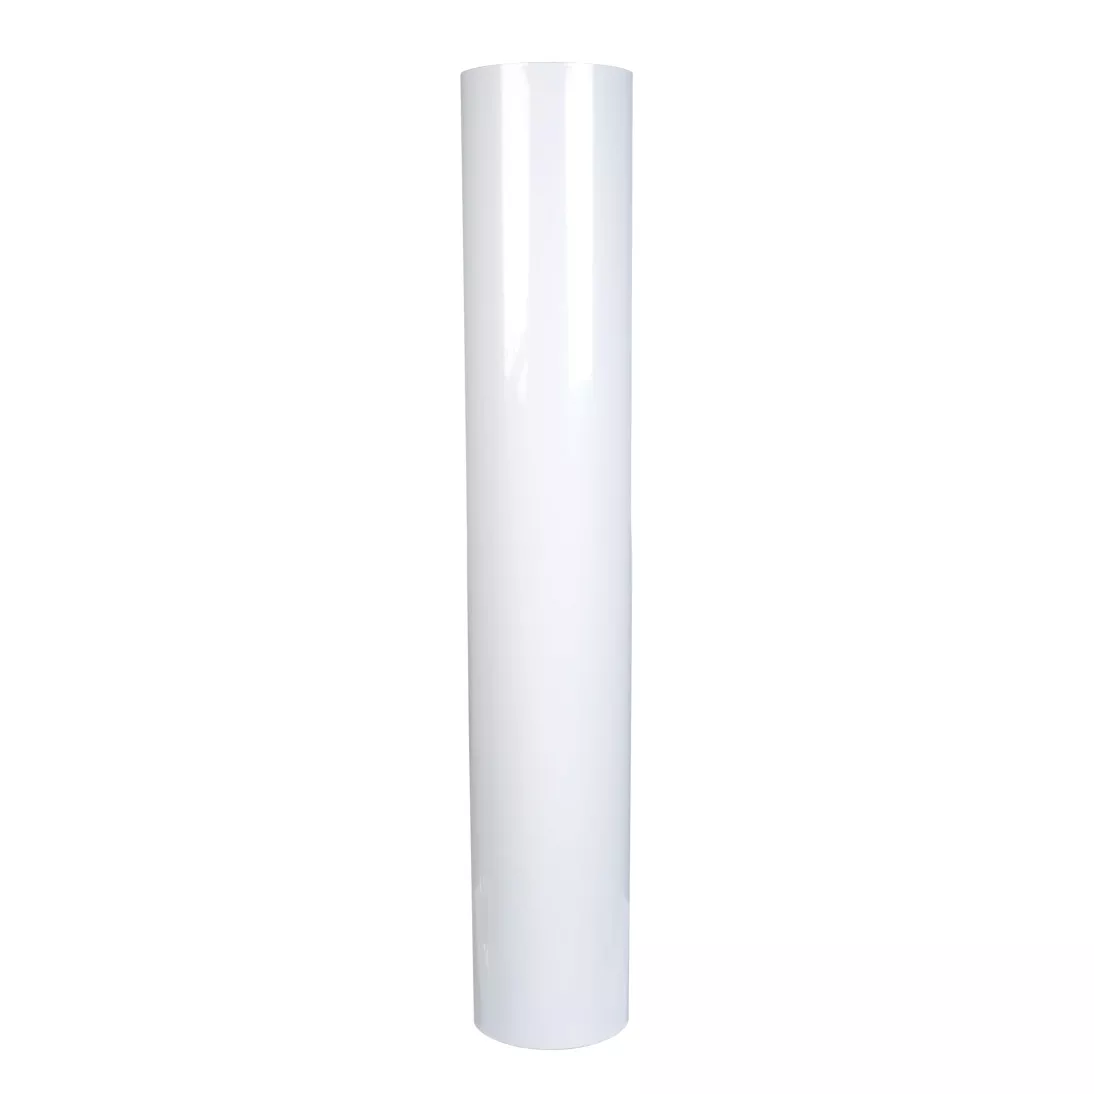 3M™ Venture Tape™ Non-Adhesive Facing 2537, White, 54 in x 150 ft, 1
roll per case